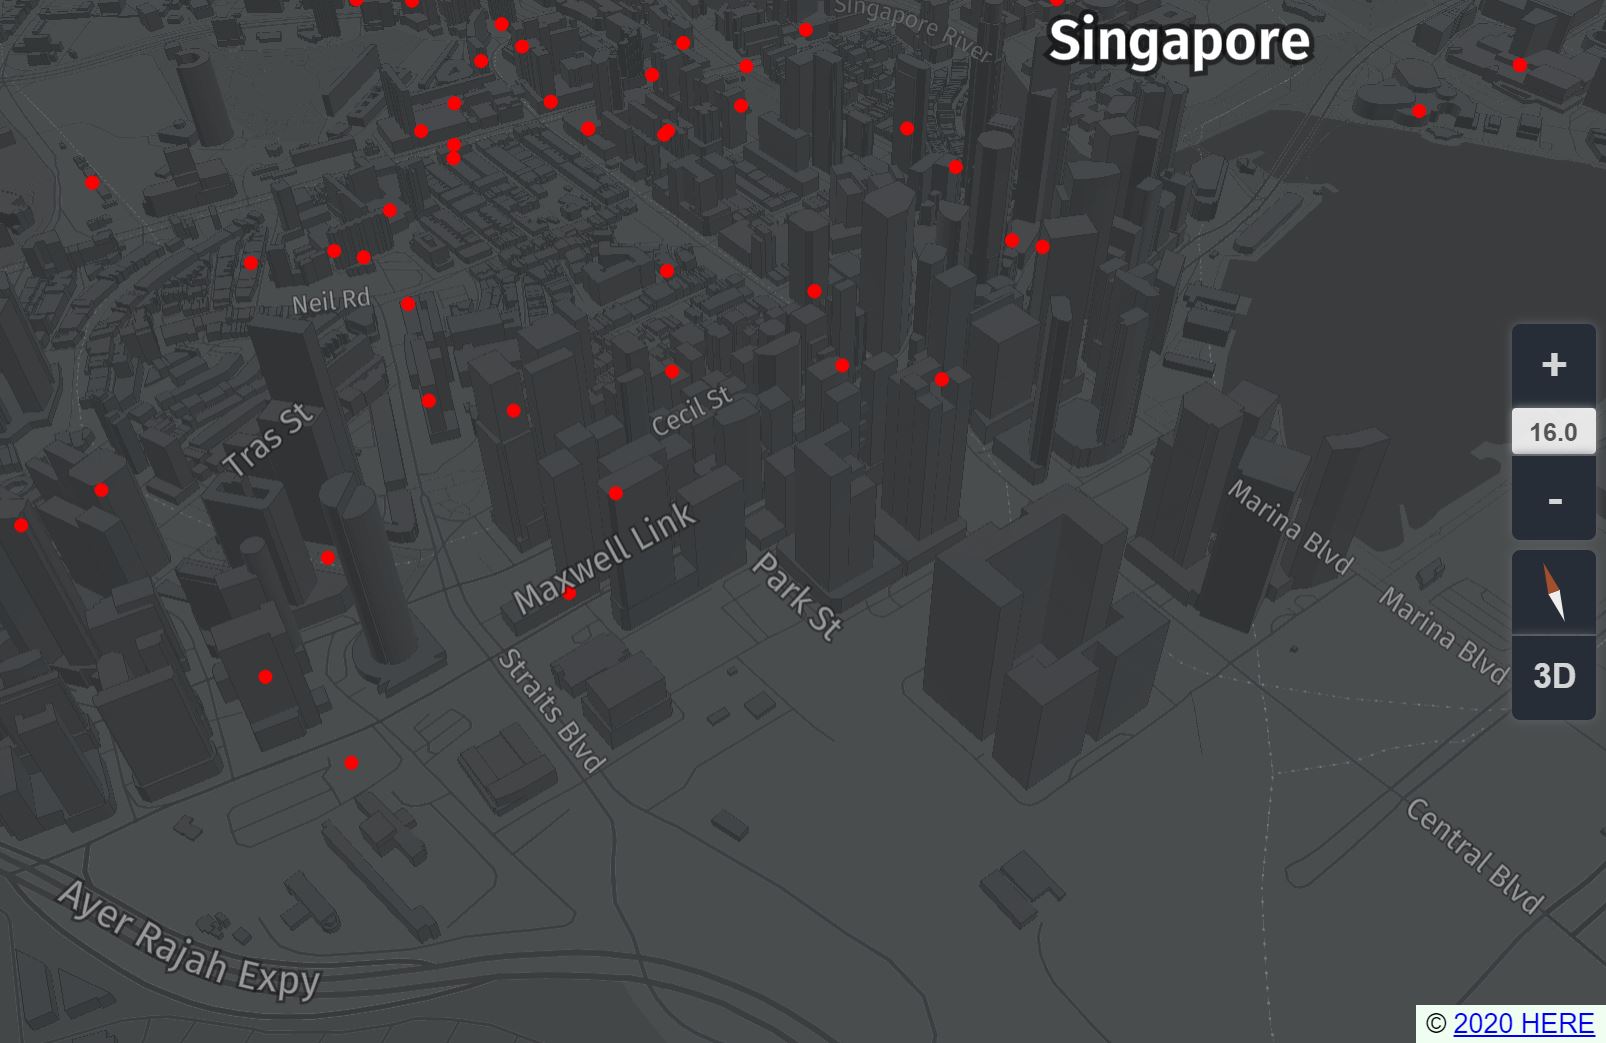 WiFi hotspots in Singapore